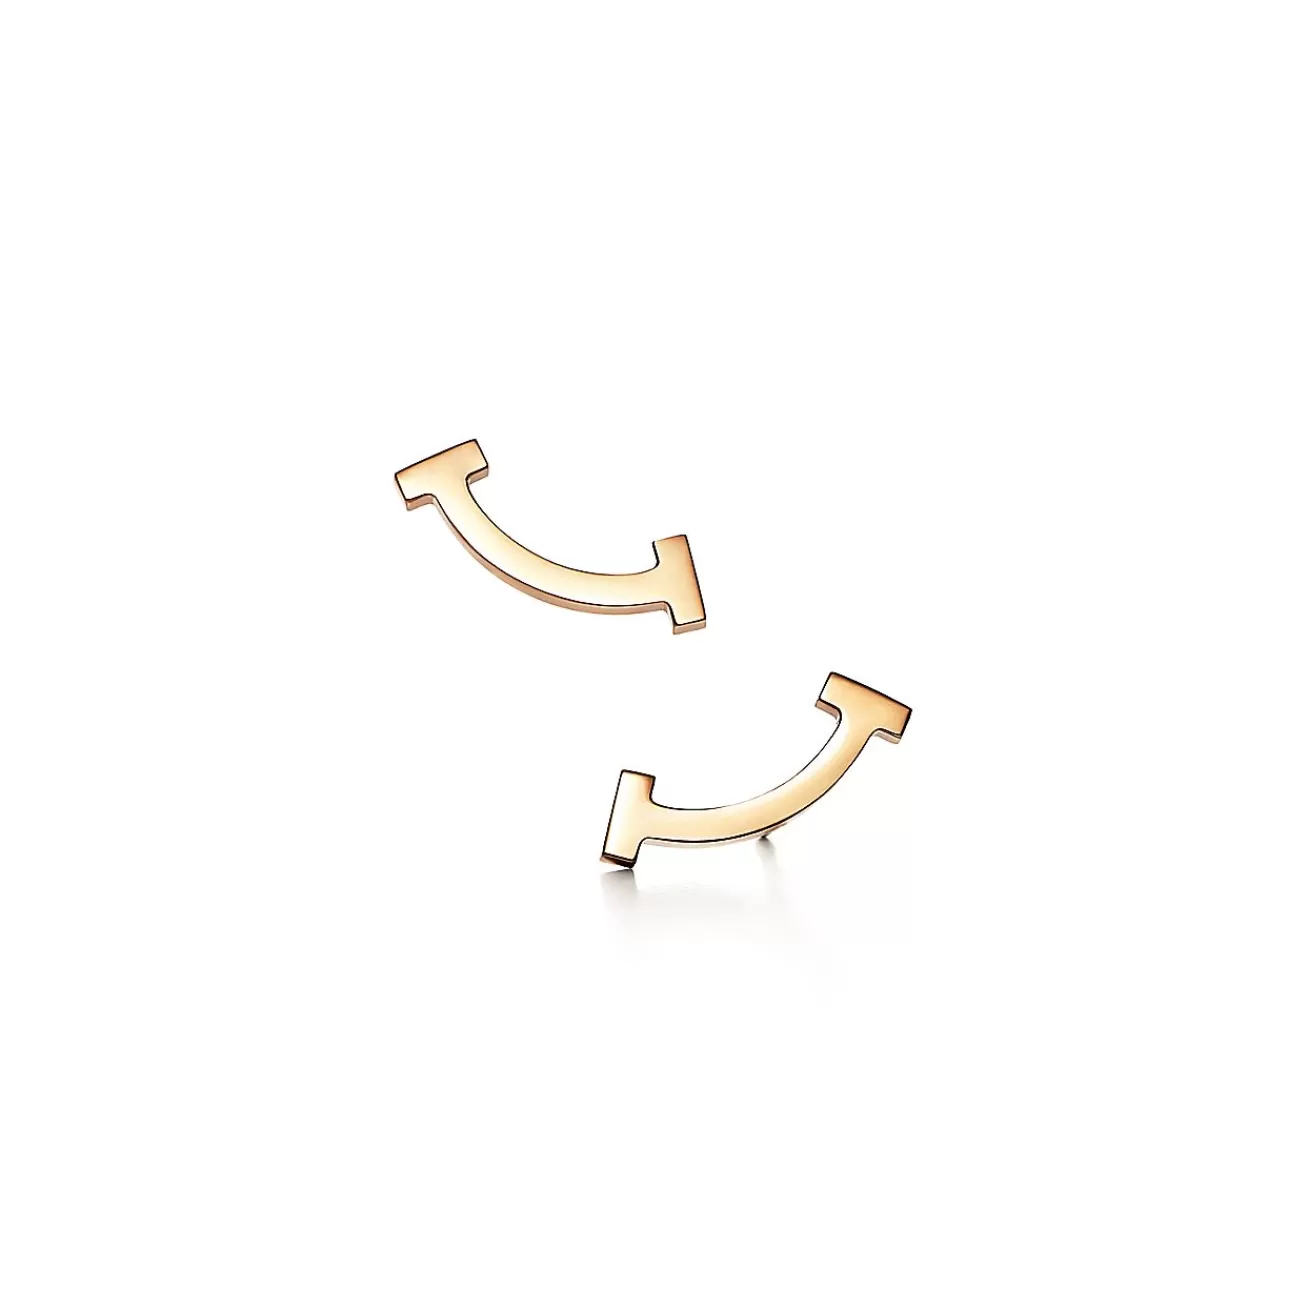 Tiffany & Co. Tiffany T smile earrings in 18k gold. | ^ Earrings | Gifts for Her